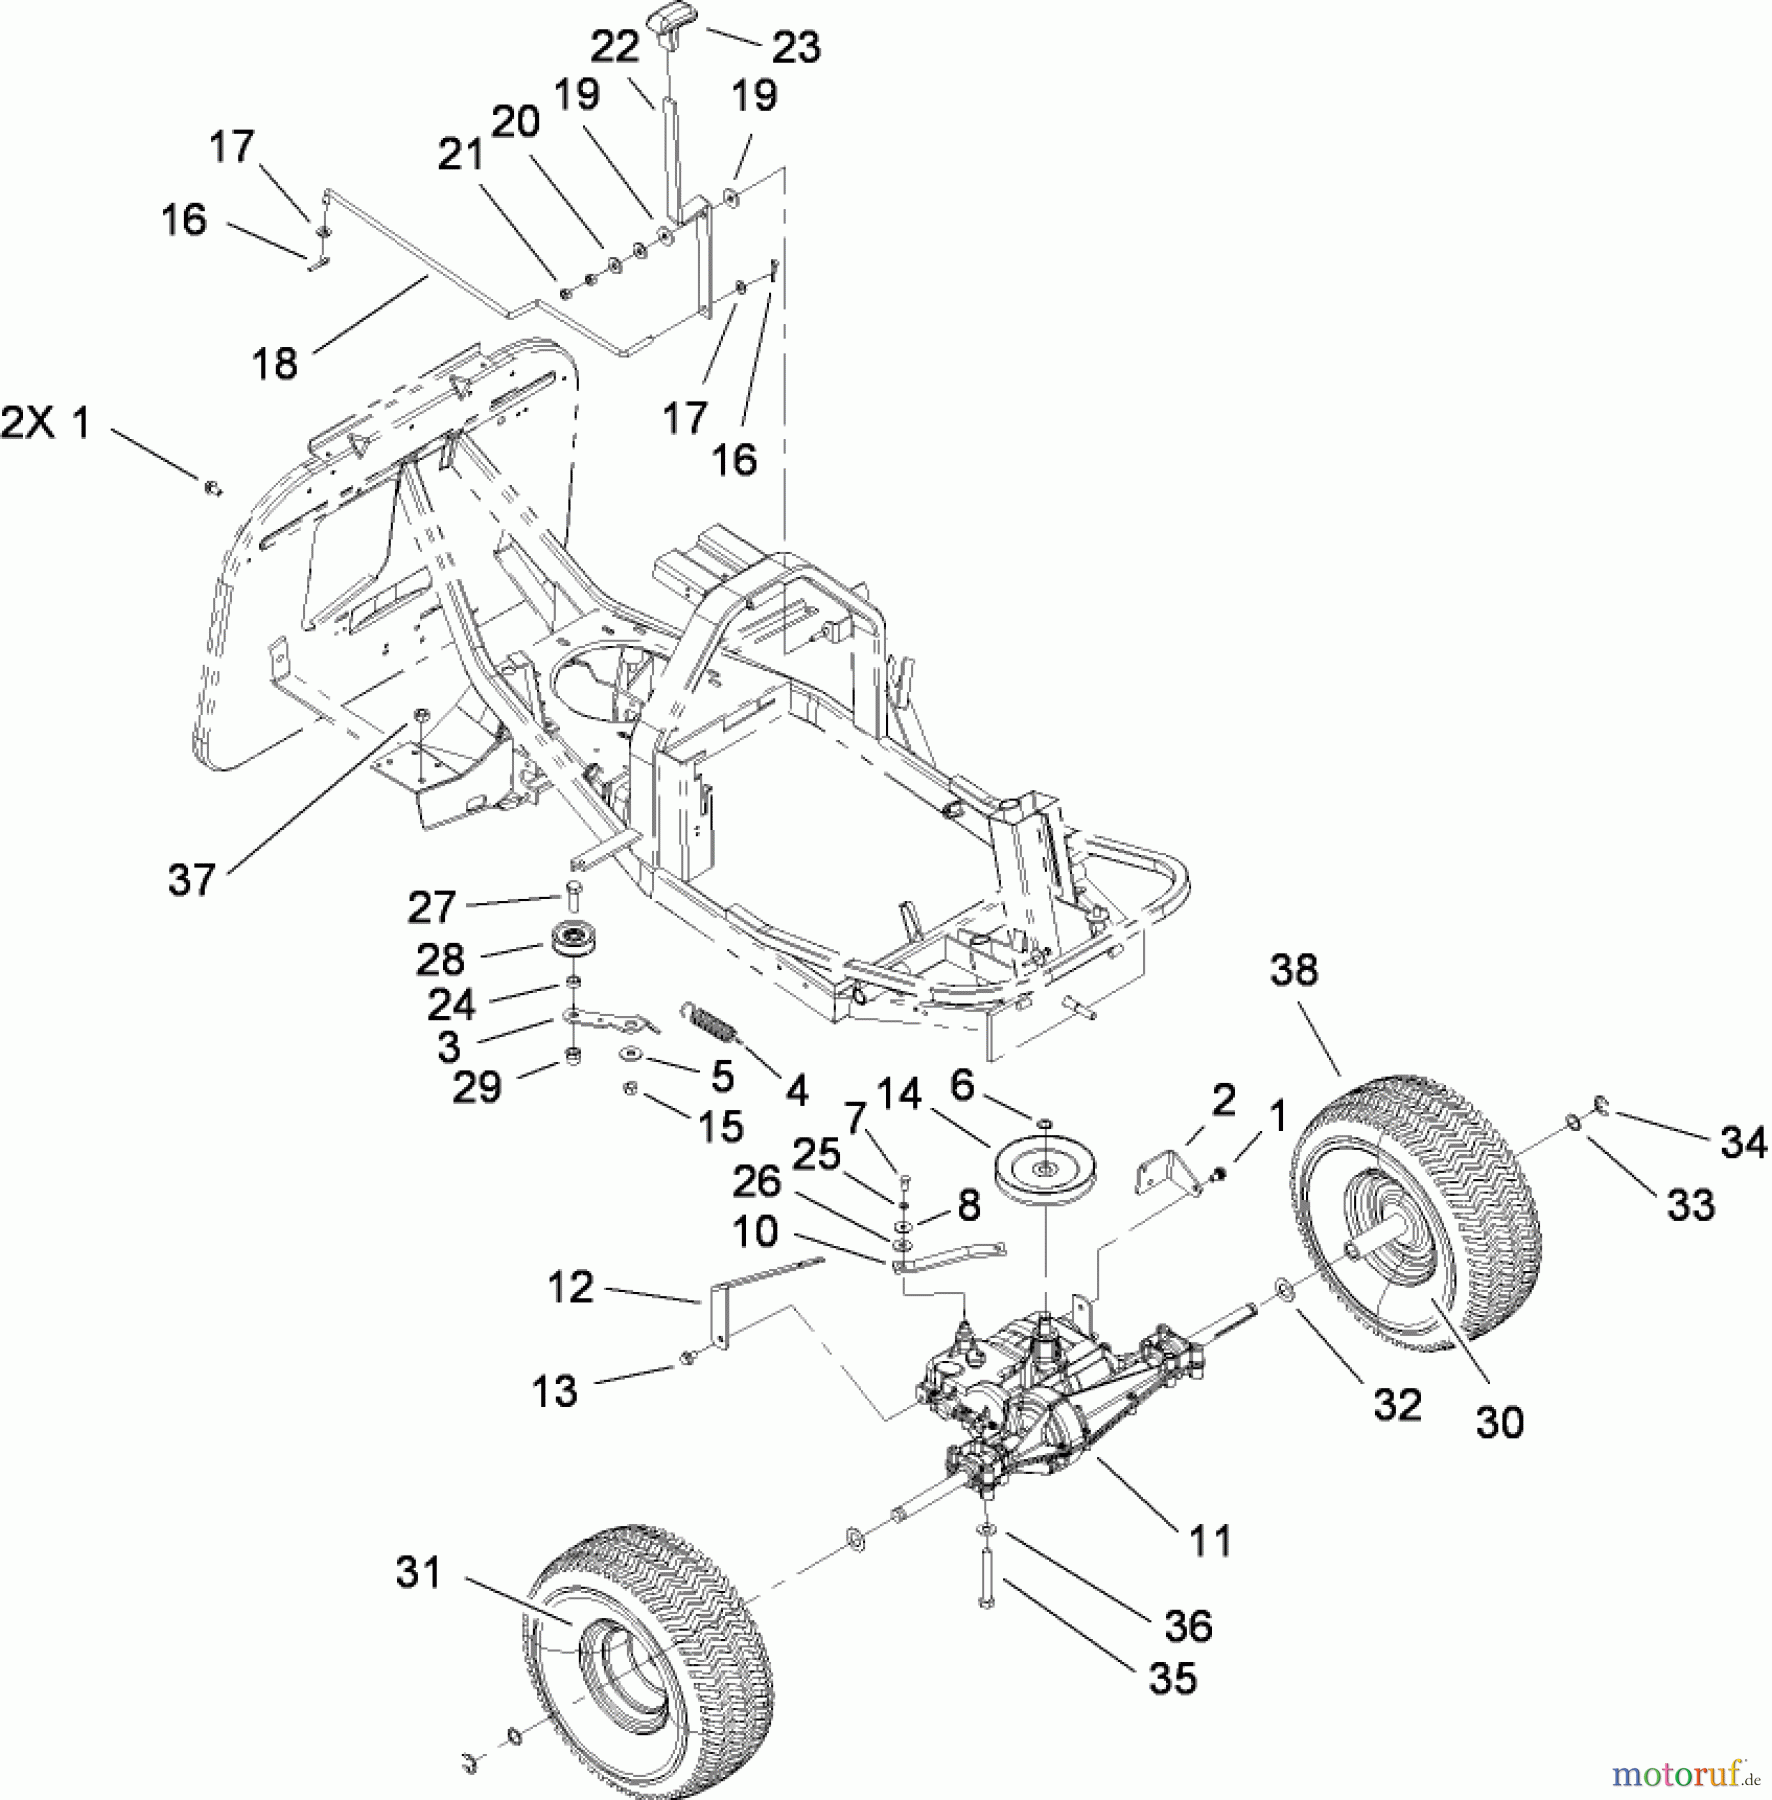  Toro Neu Mowers, Rear-Engine Rider 70185 (G132) - Toro G132 Rear-Engine Riding Mower, 2009 (280899565-290999999) GEAR TRANSMISSION AND LINKAGE ASSEMBLY